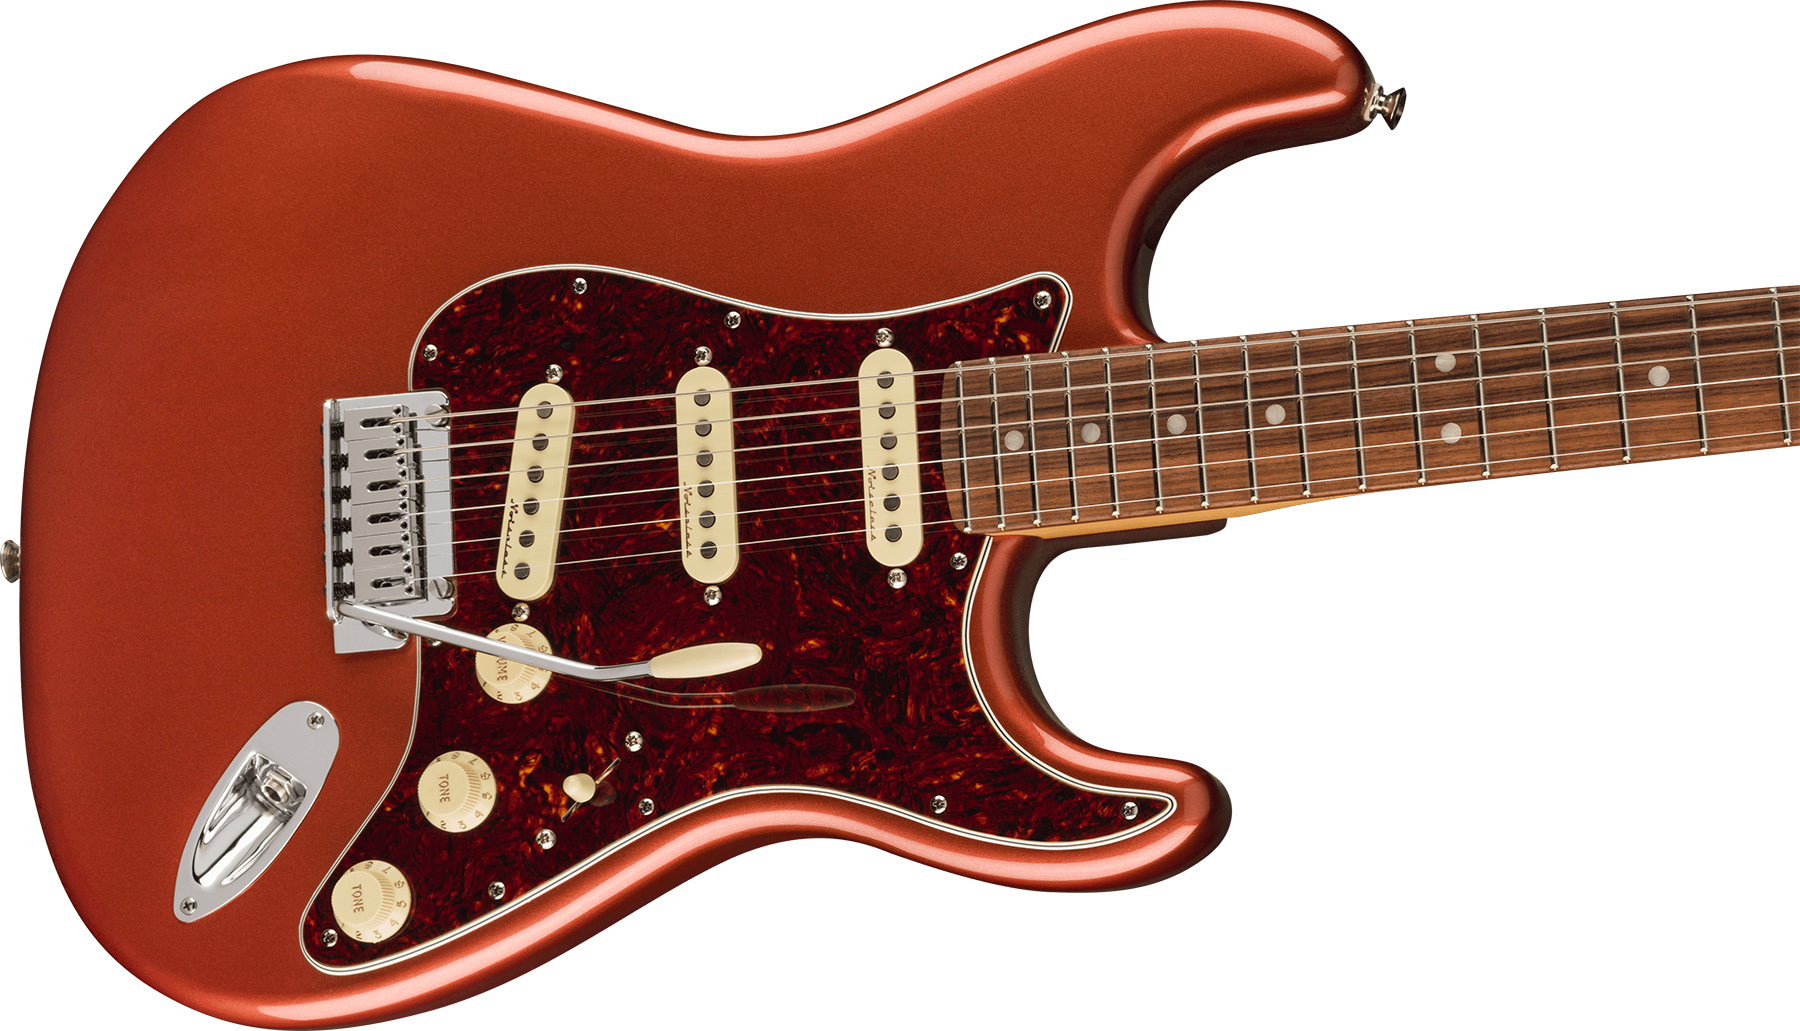 Fender Strat Player Plus Mex 3s Trem Pf - Aged Candy Apple Red - Guitare Électrique Forme Str - Variation 2